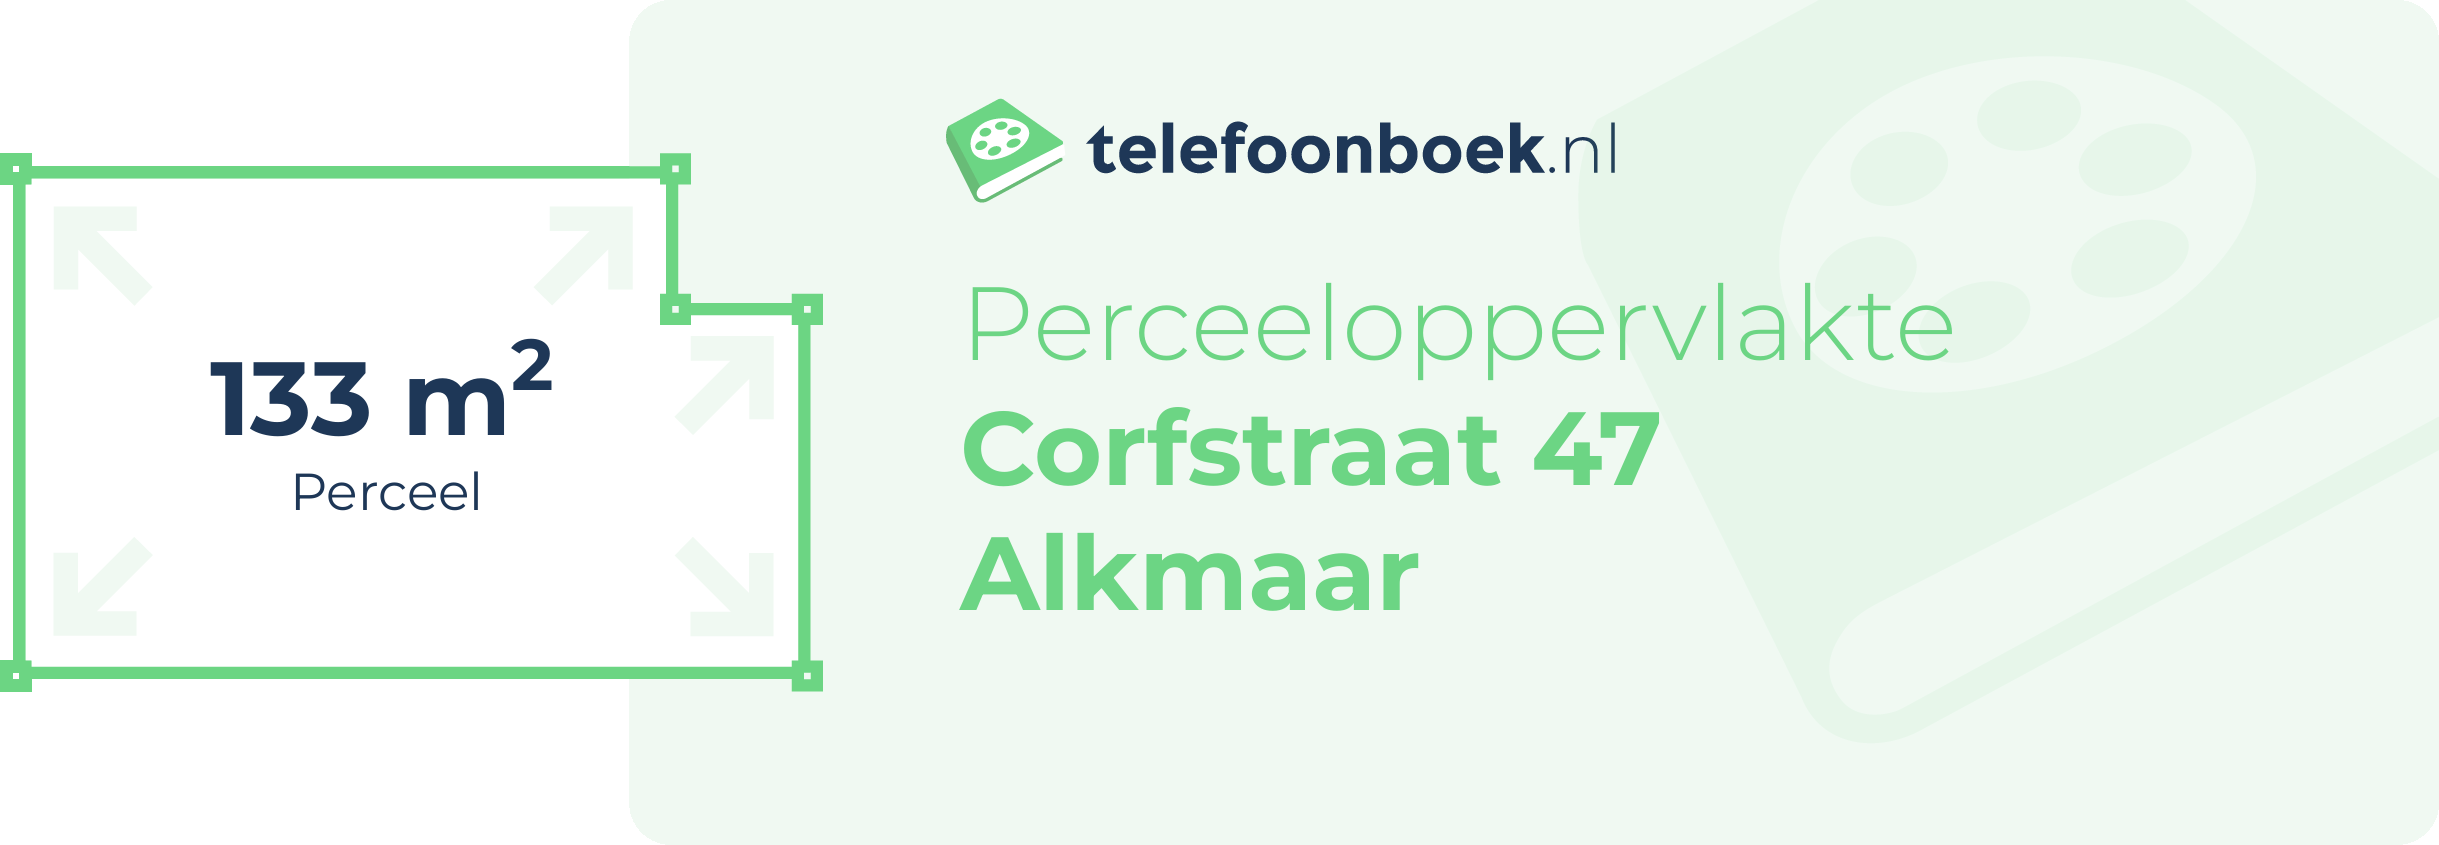 Perceeloppervlakte Corfstraat 47 Alkmaar